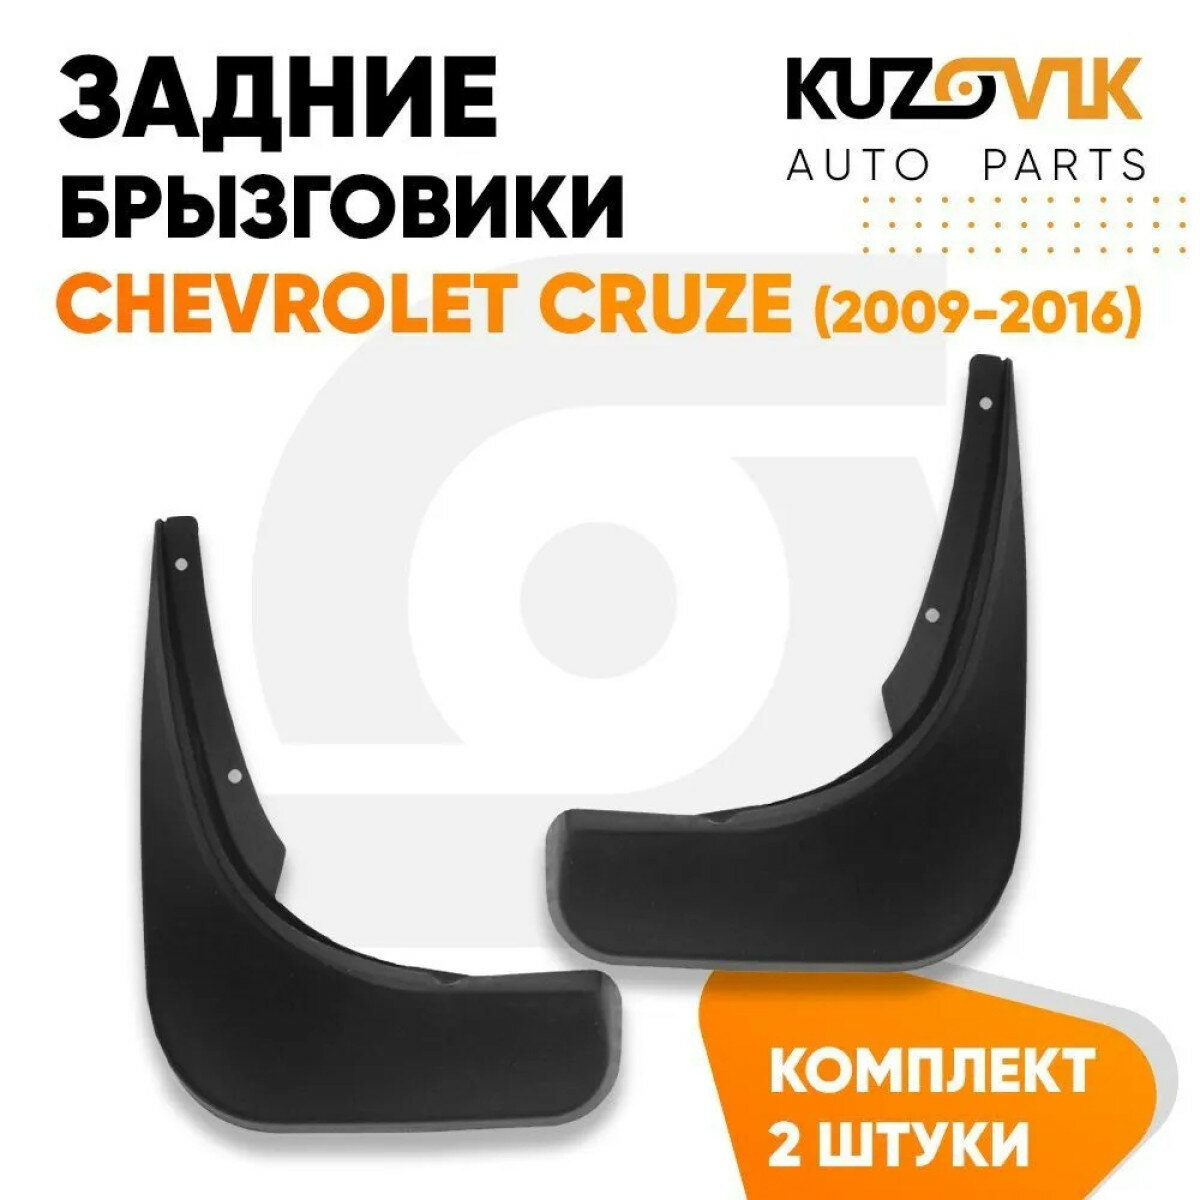 Брызговики задние Chevrolet Cruze Шевроле Круз (2009-2016) комплект 2 штуки